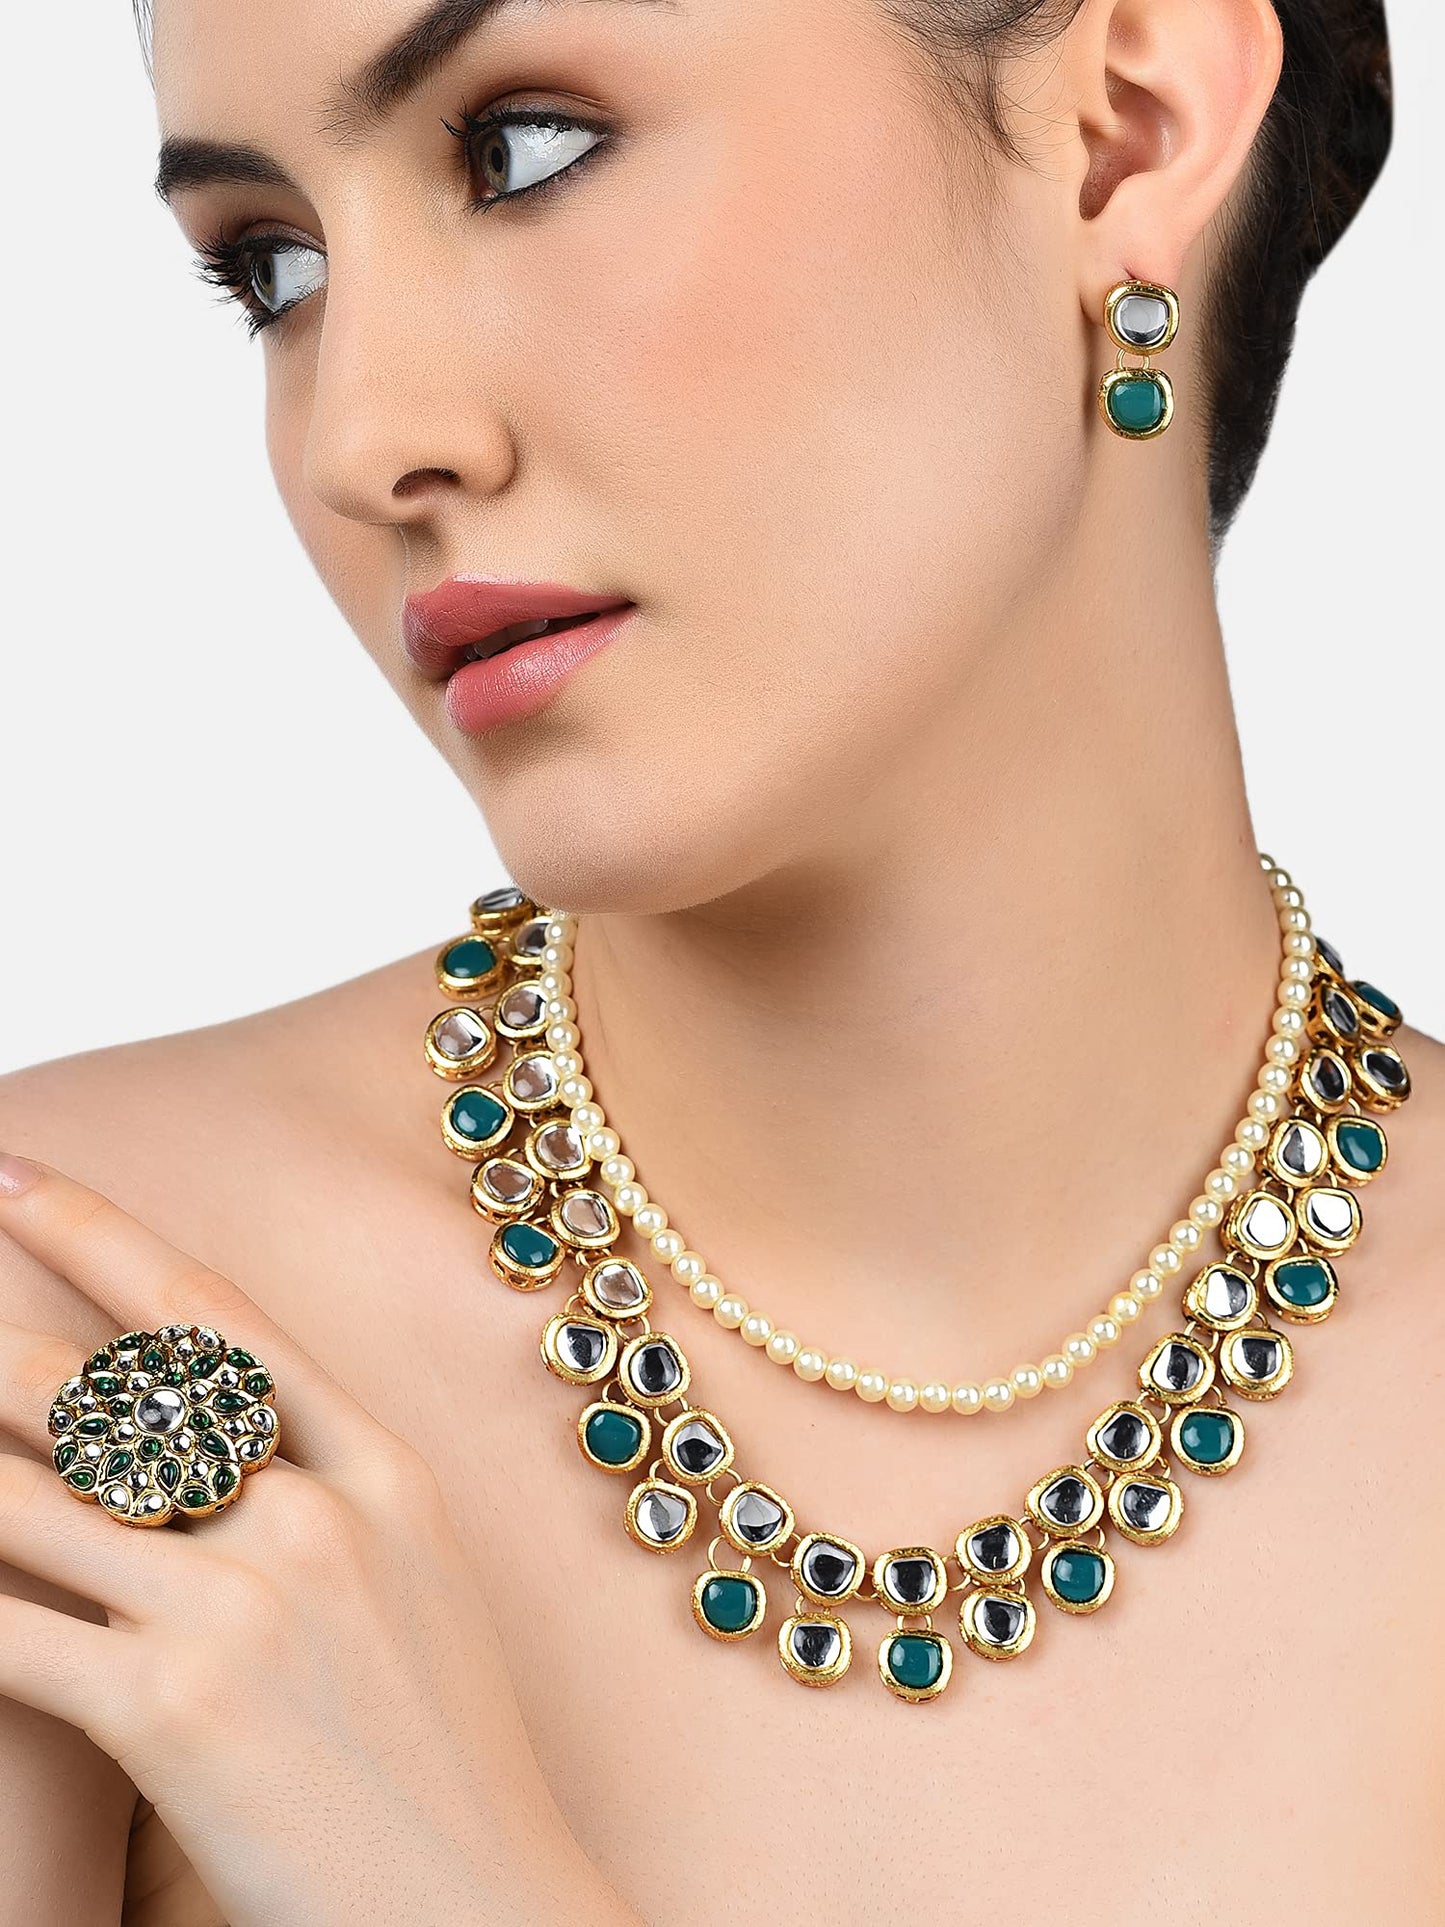 Zaveri Pearls Green Kundan Multi Layers Necklace Earring & Ring Set For Women-ZPFK10778